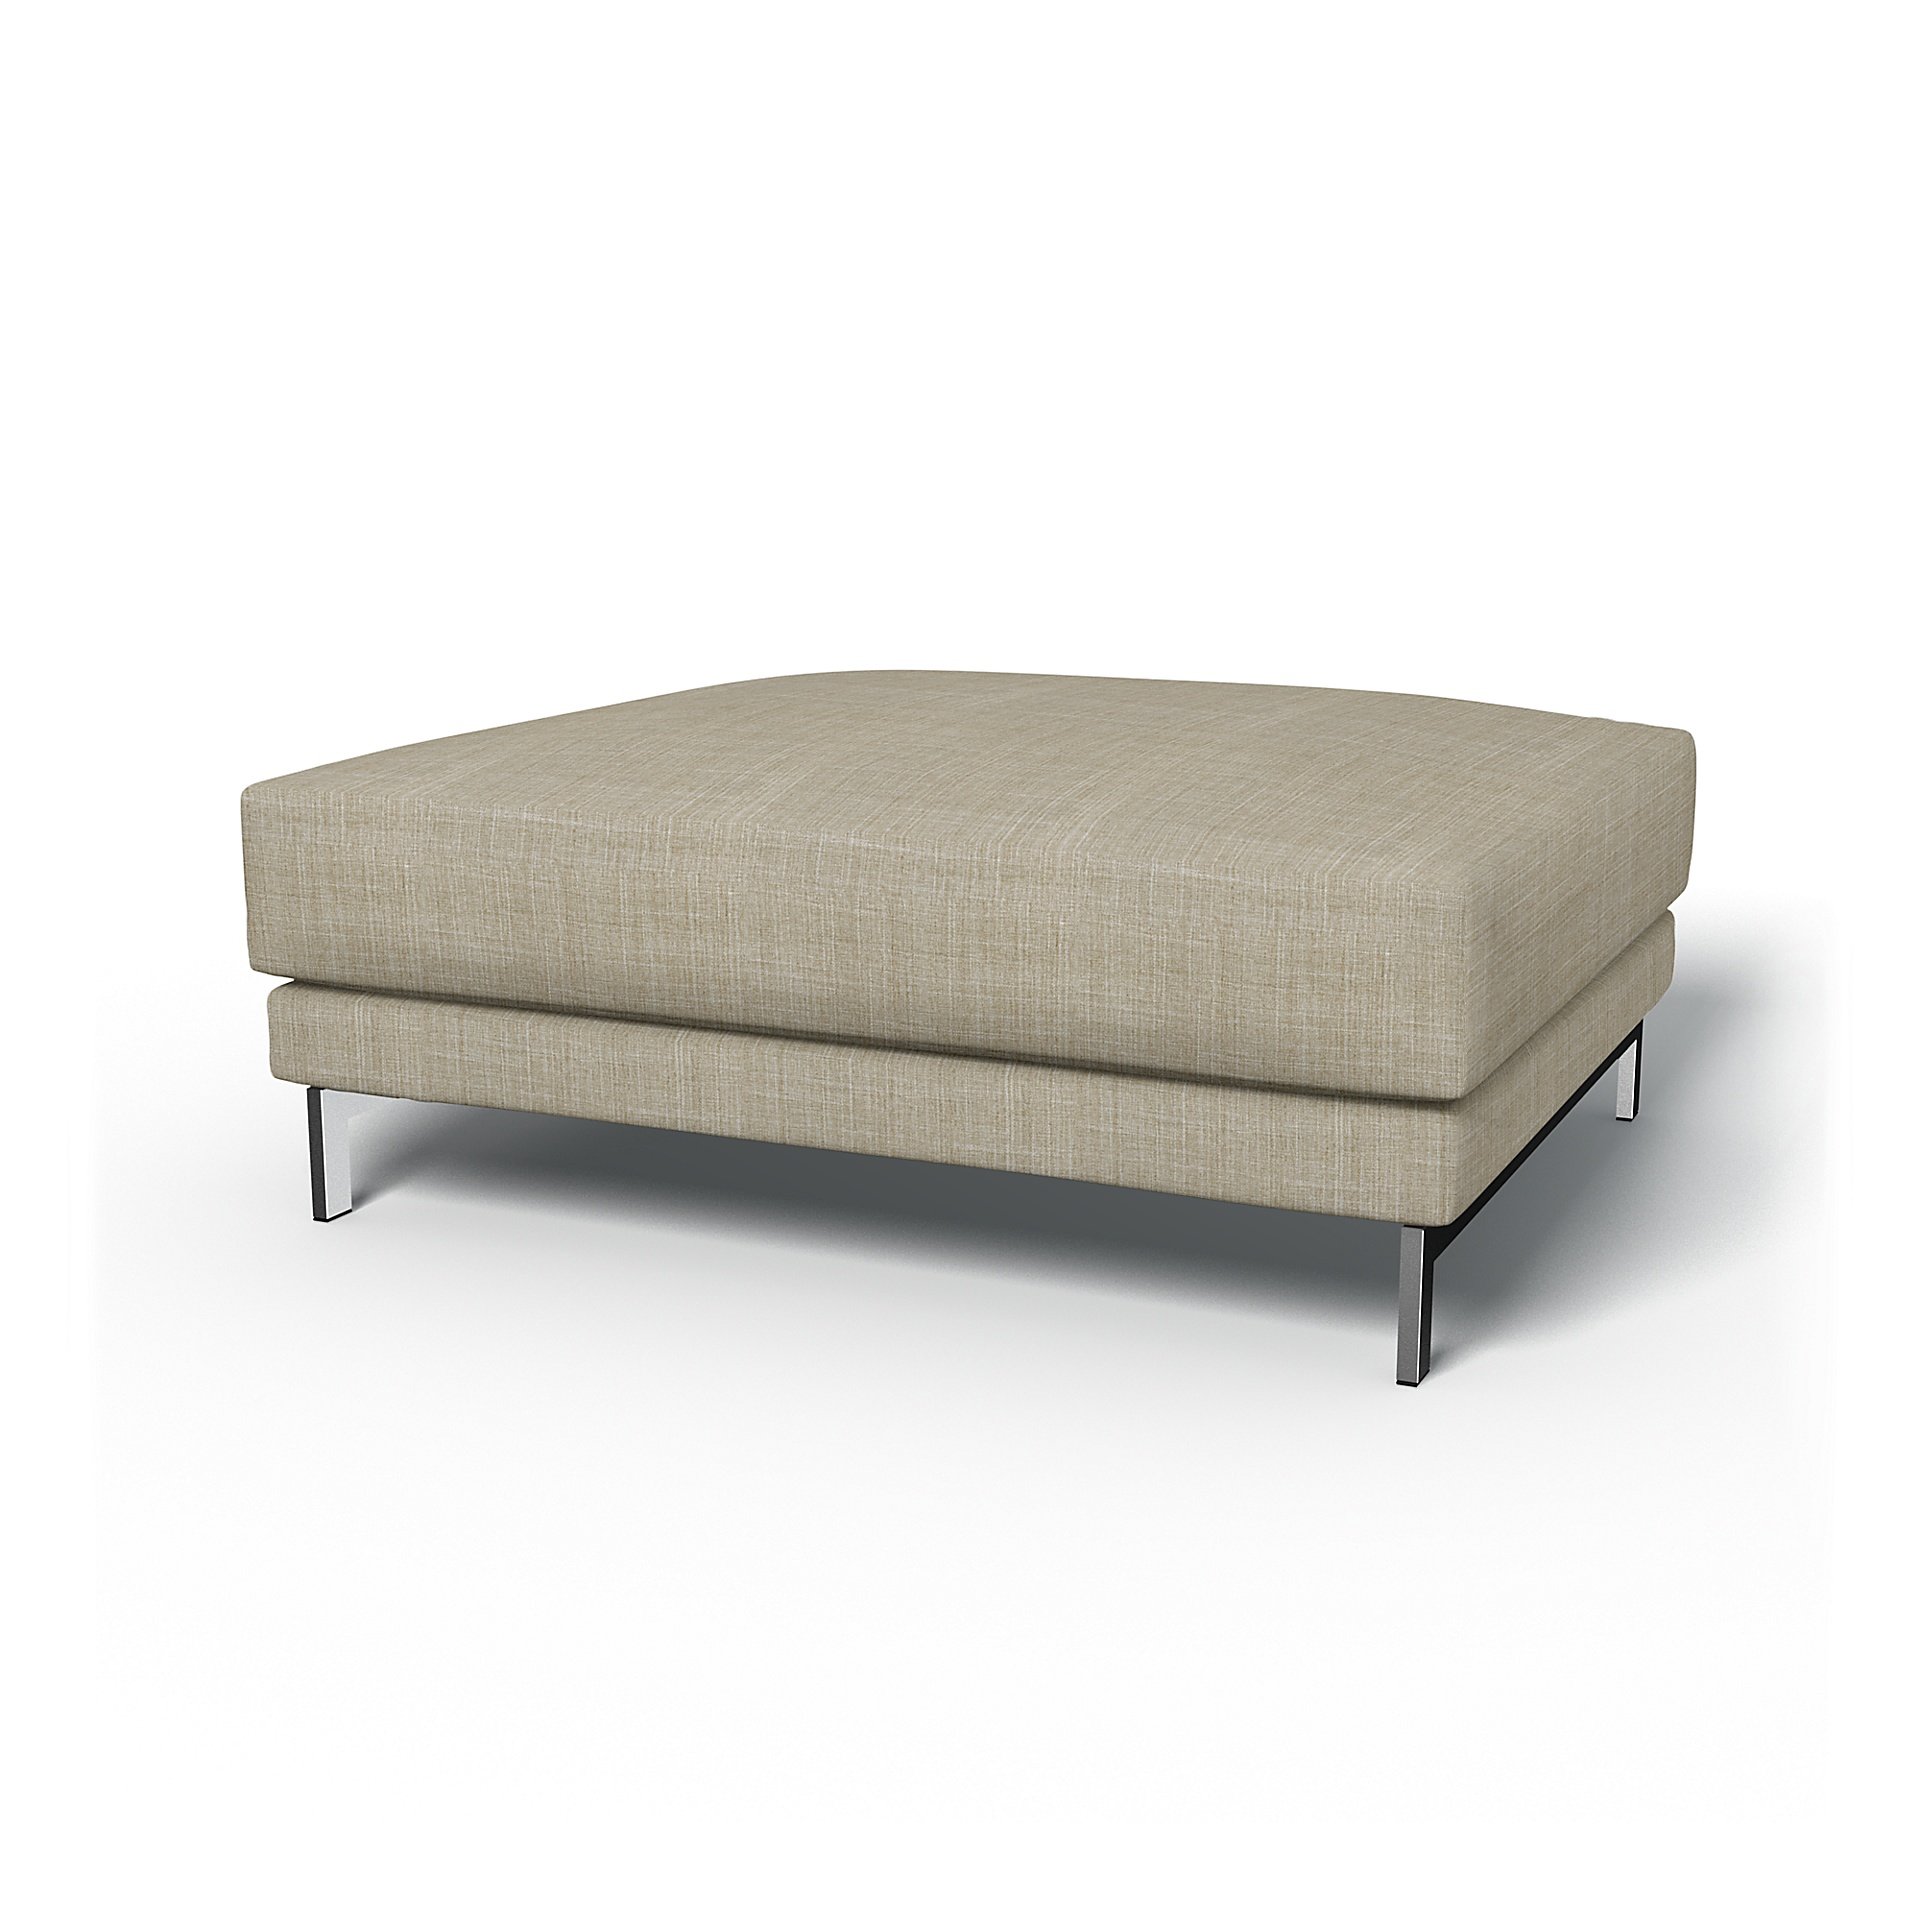 IKEA - Nockeby Footstool Cover, Sand Beige, Boucle & Texture - Bemz